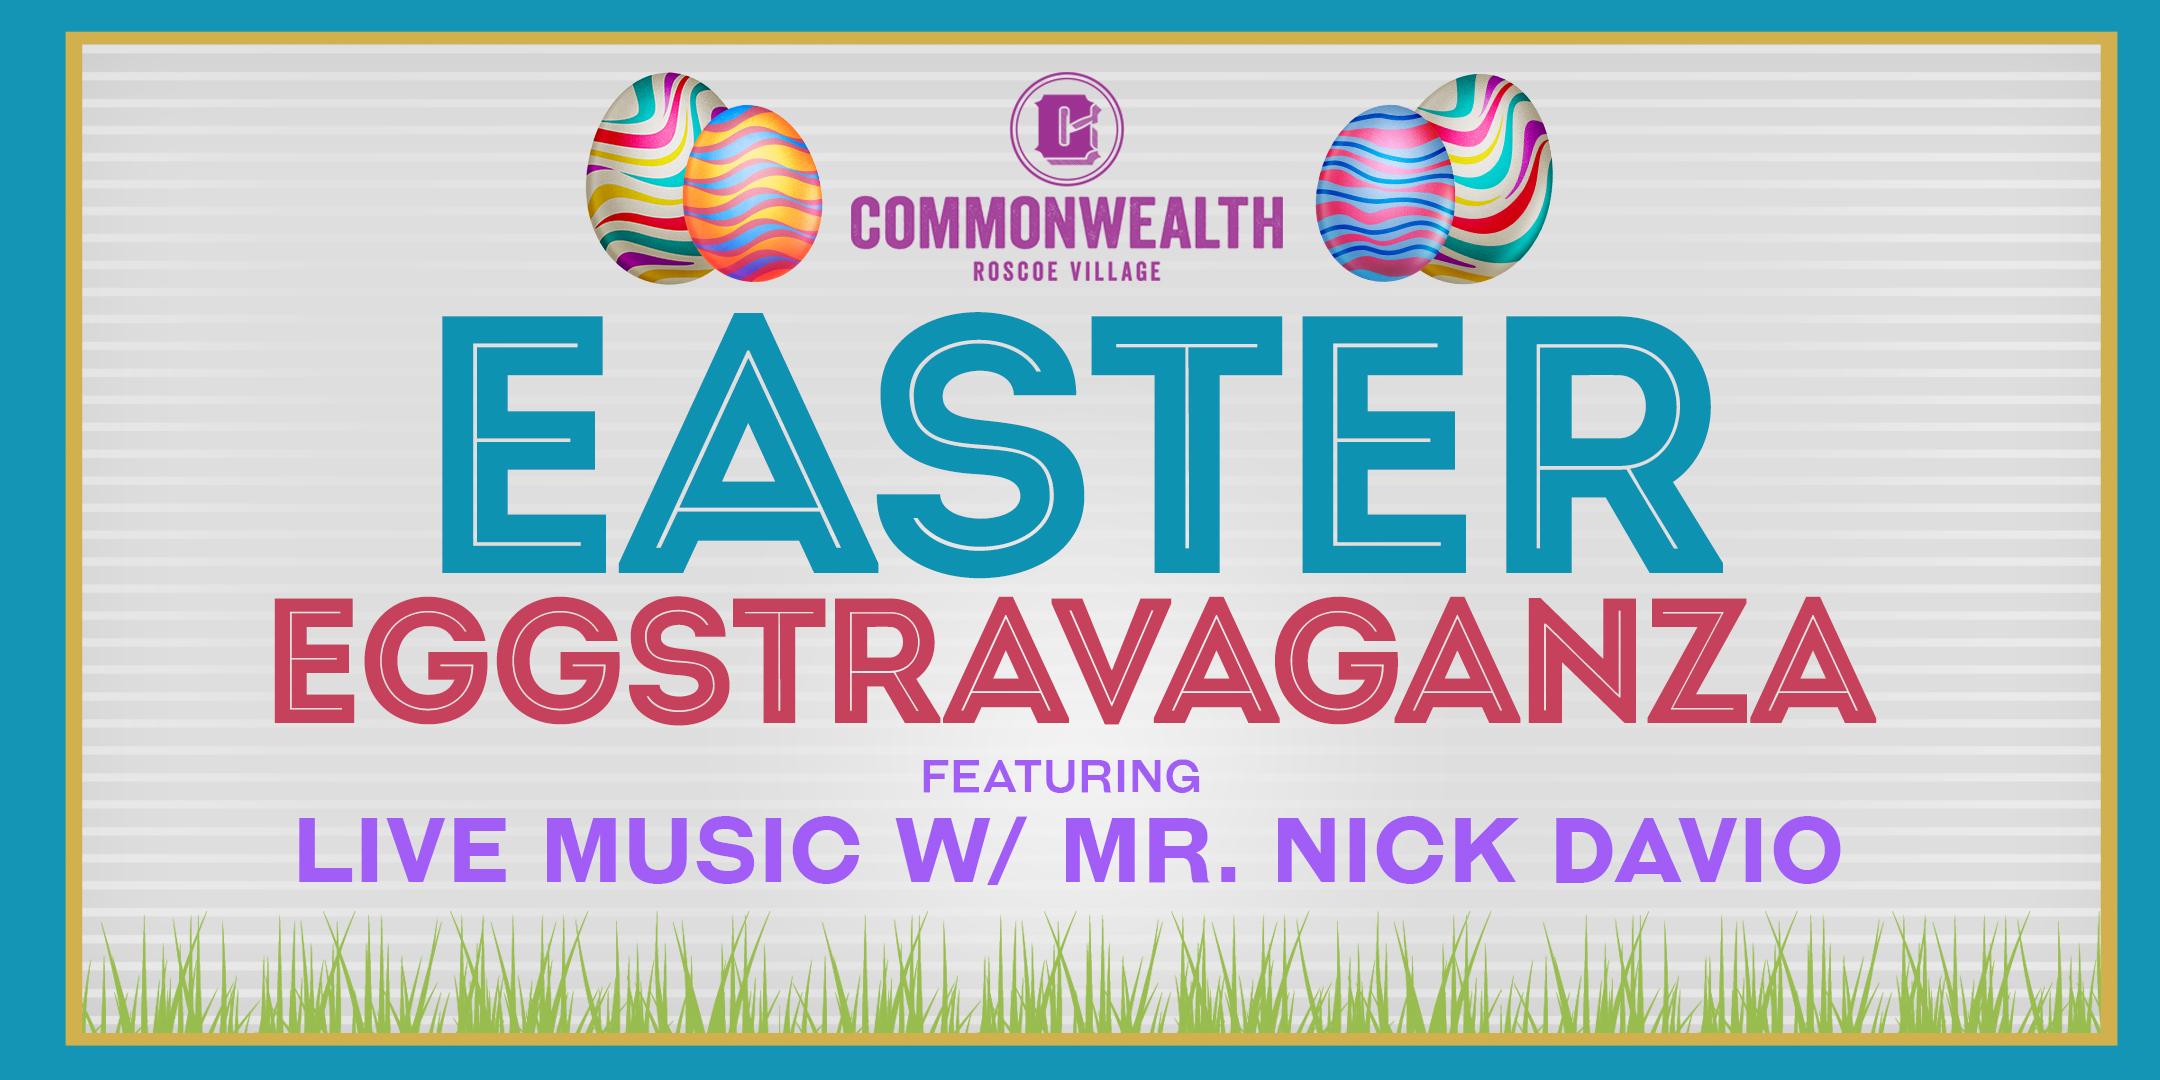 Easter Eggstravaganza @ Commonwealth